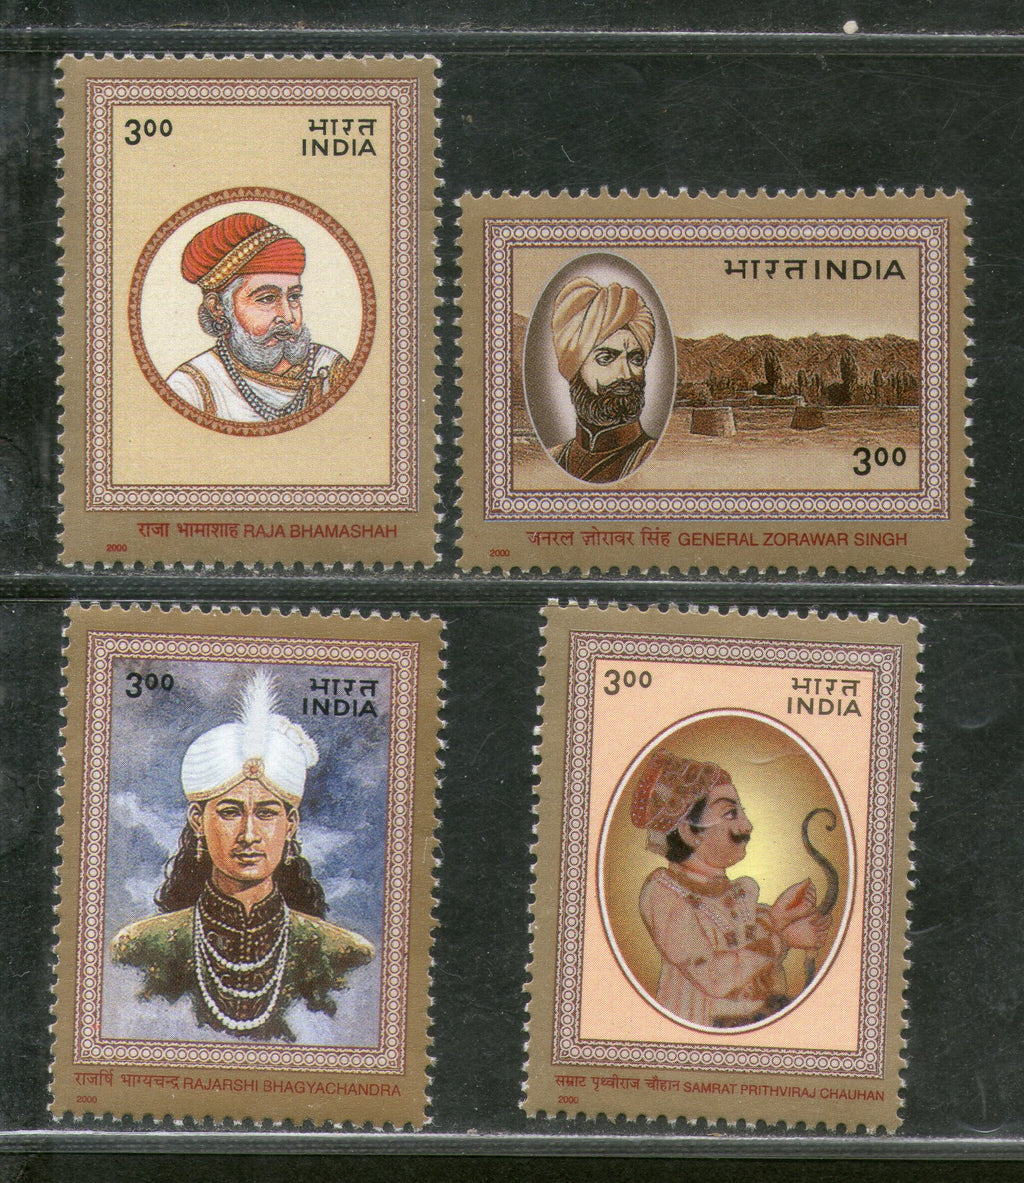 India 2000 Historical Personality King Prithviraj Phila-1807-10 MNH